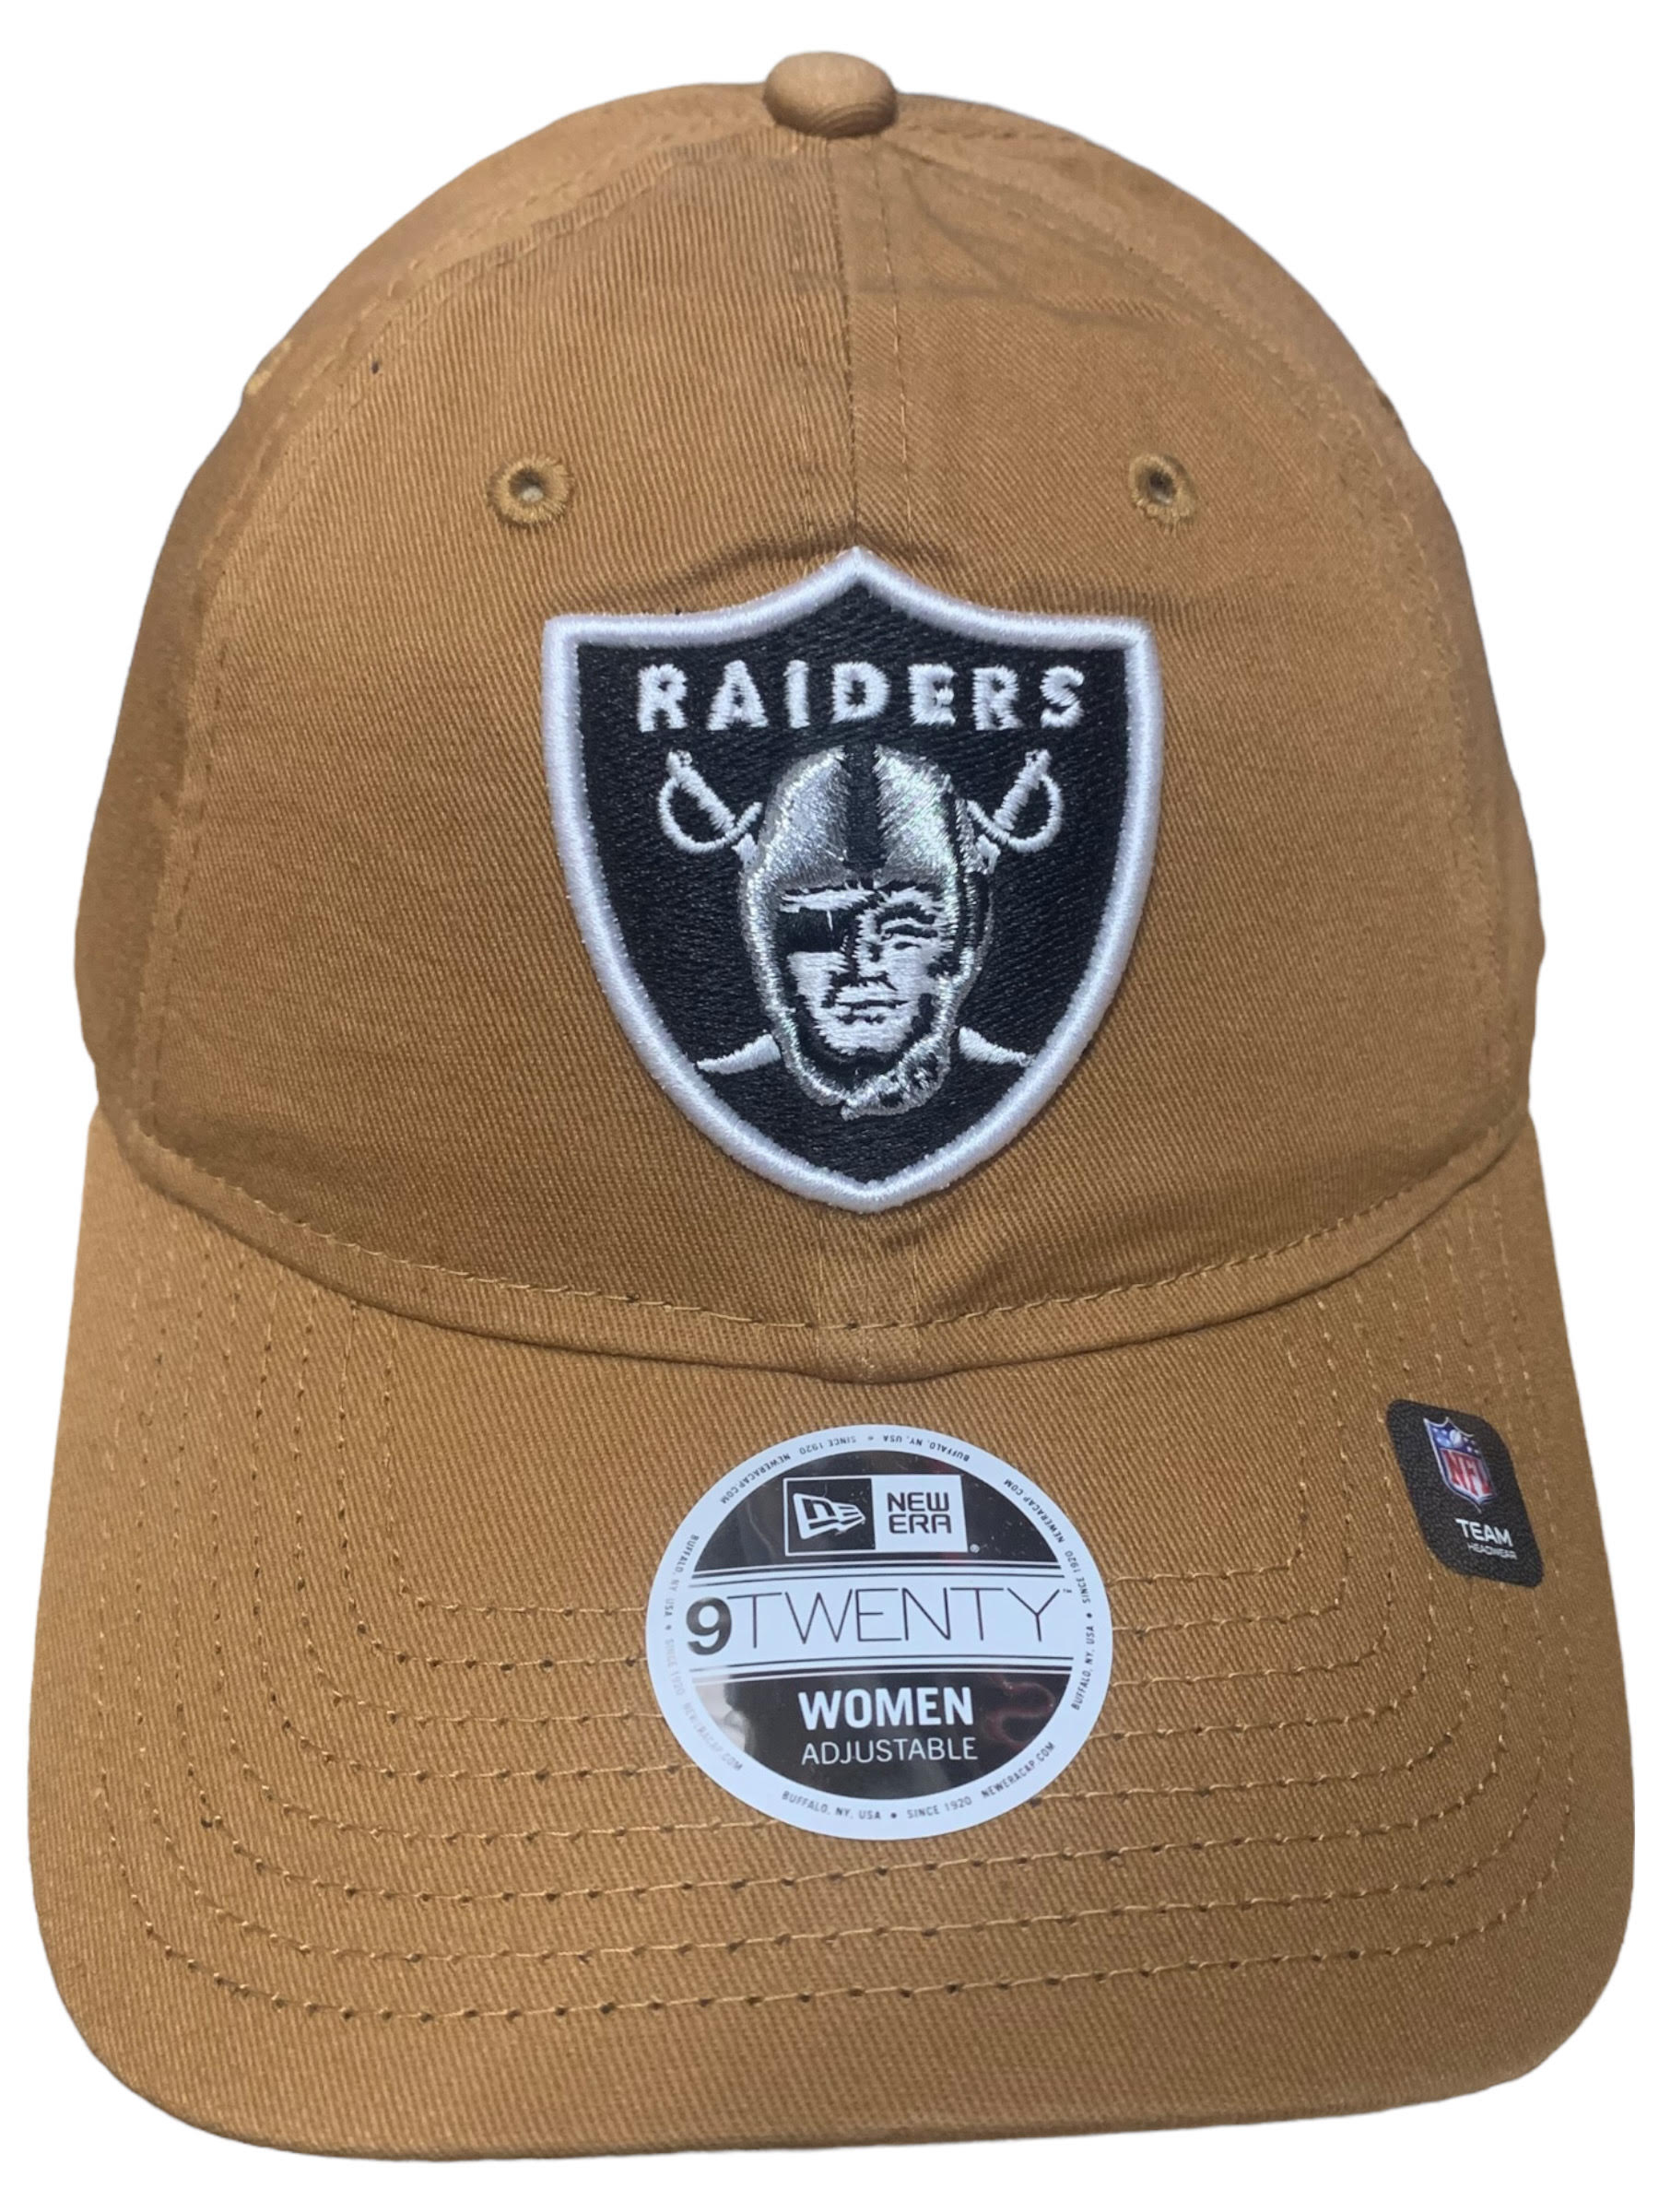 lv raiders hats for women